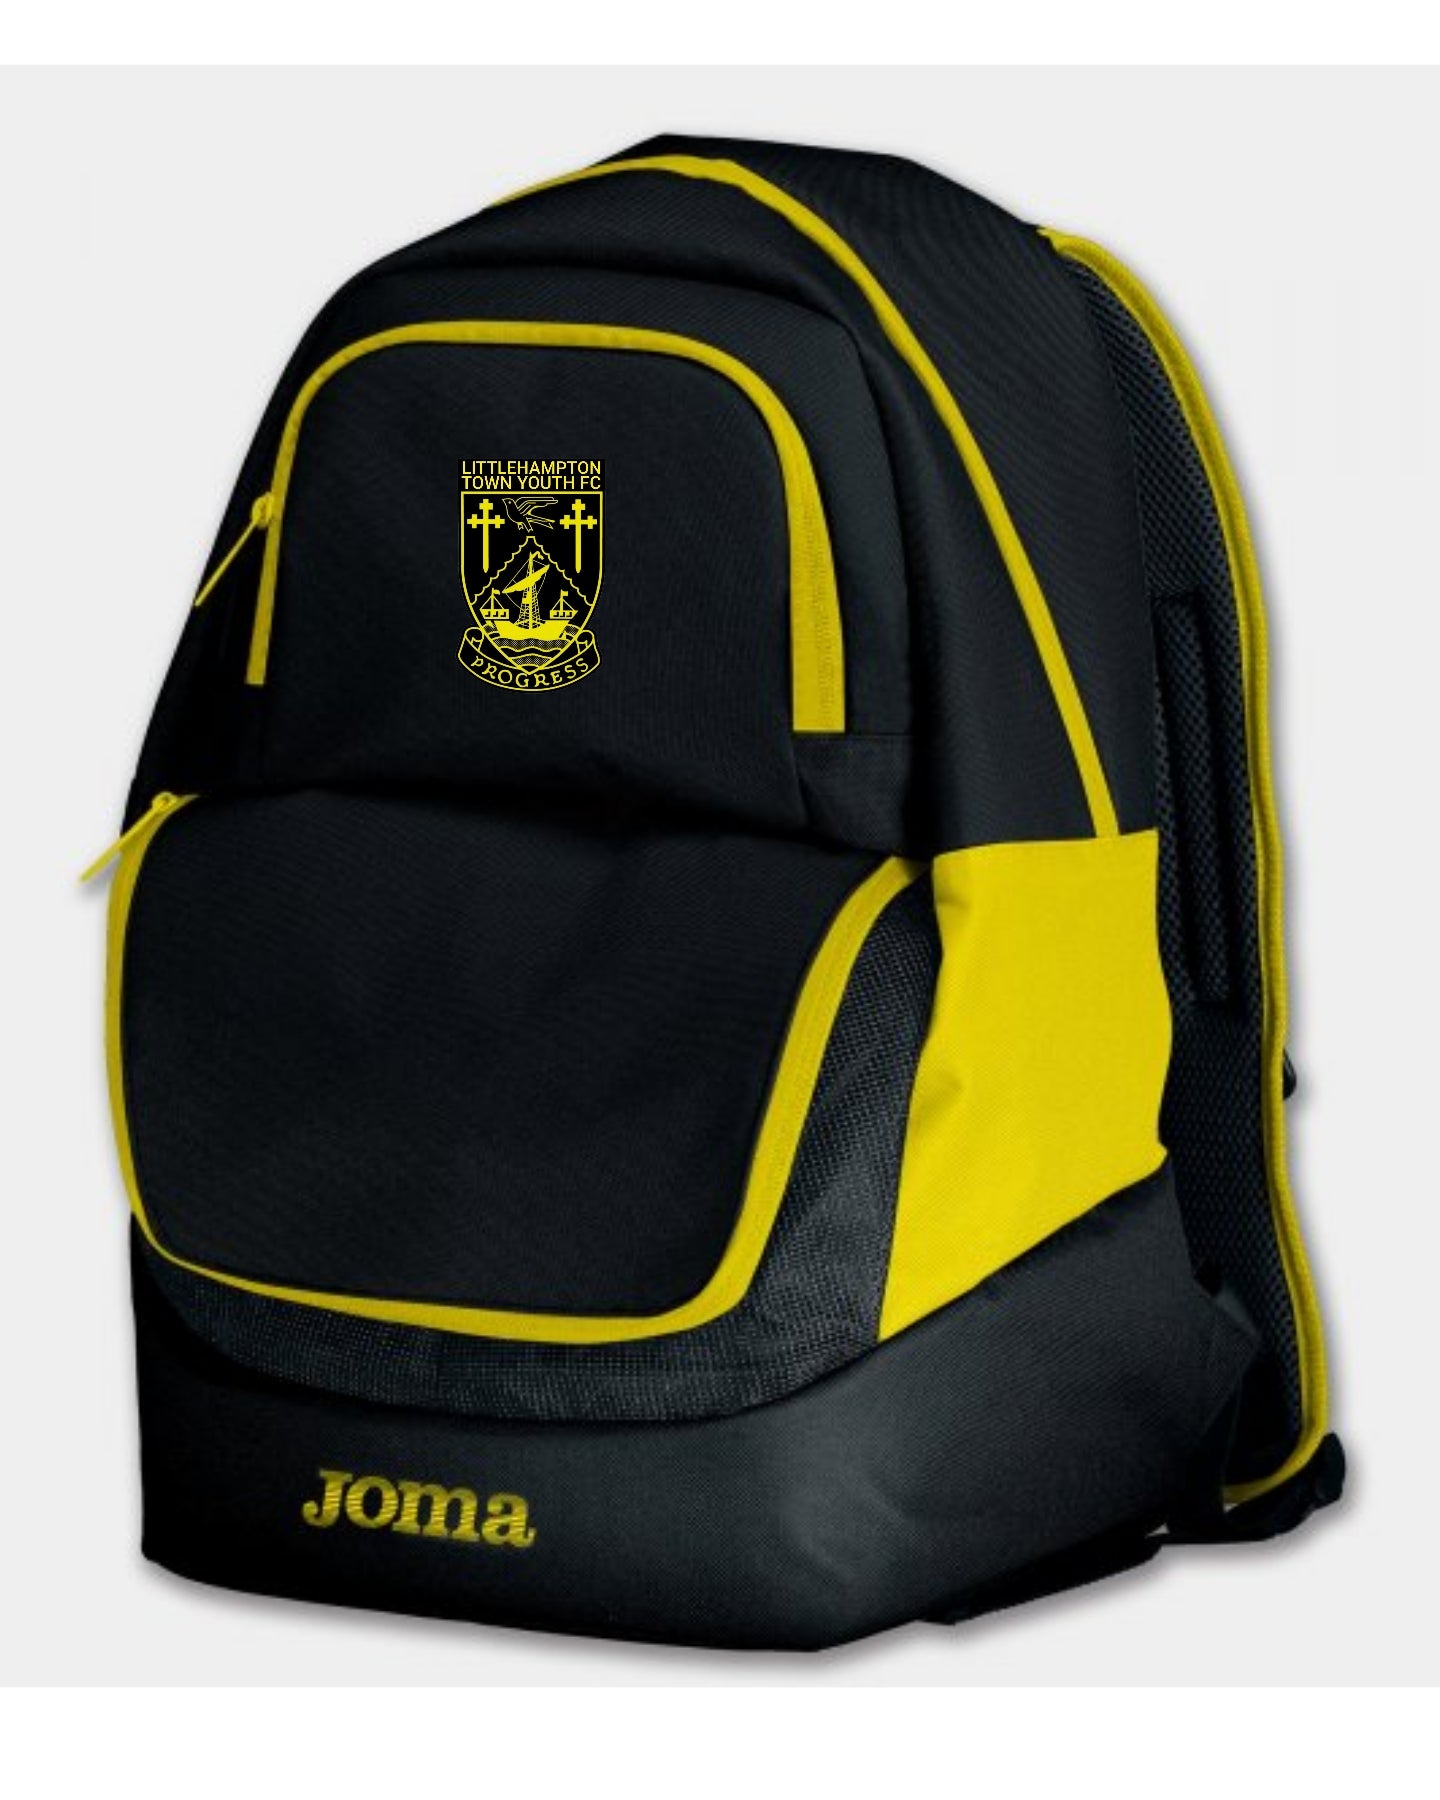 LTYFC Joma Backpack Black/Yellow